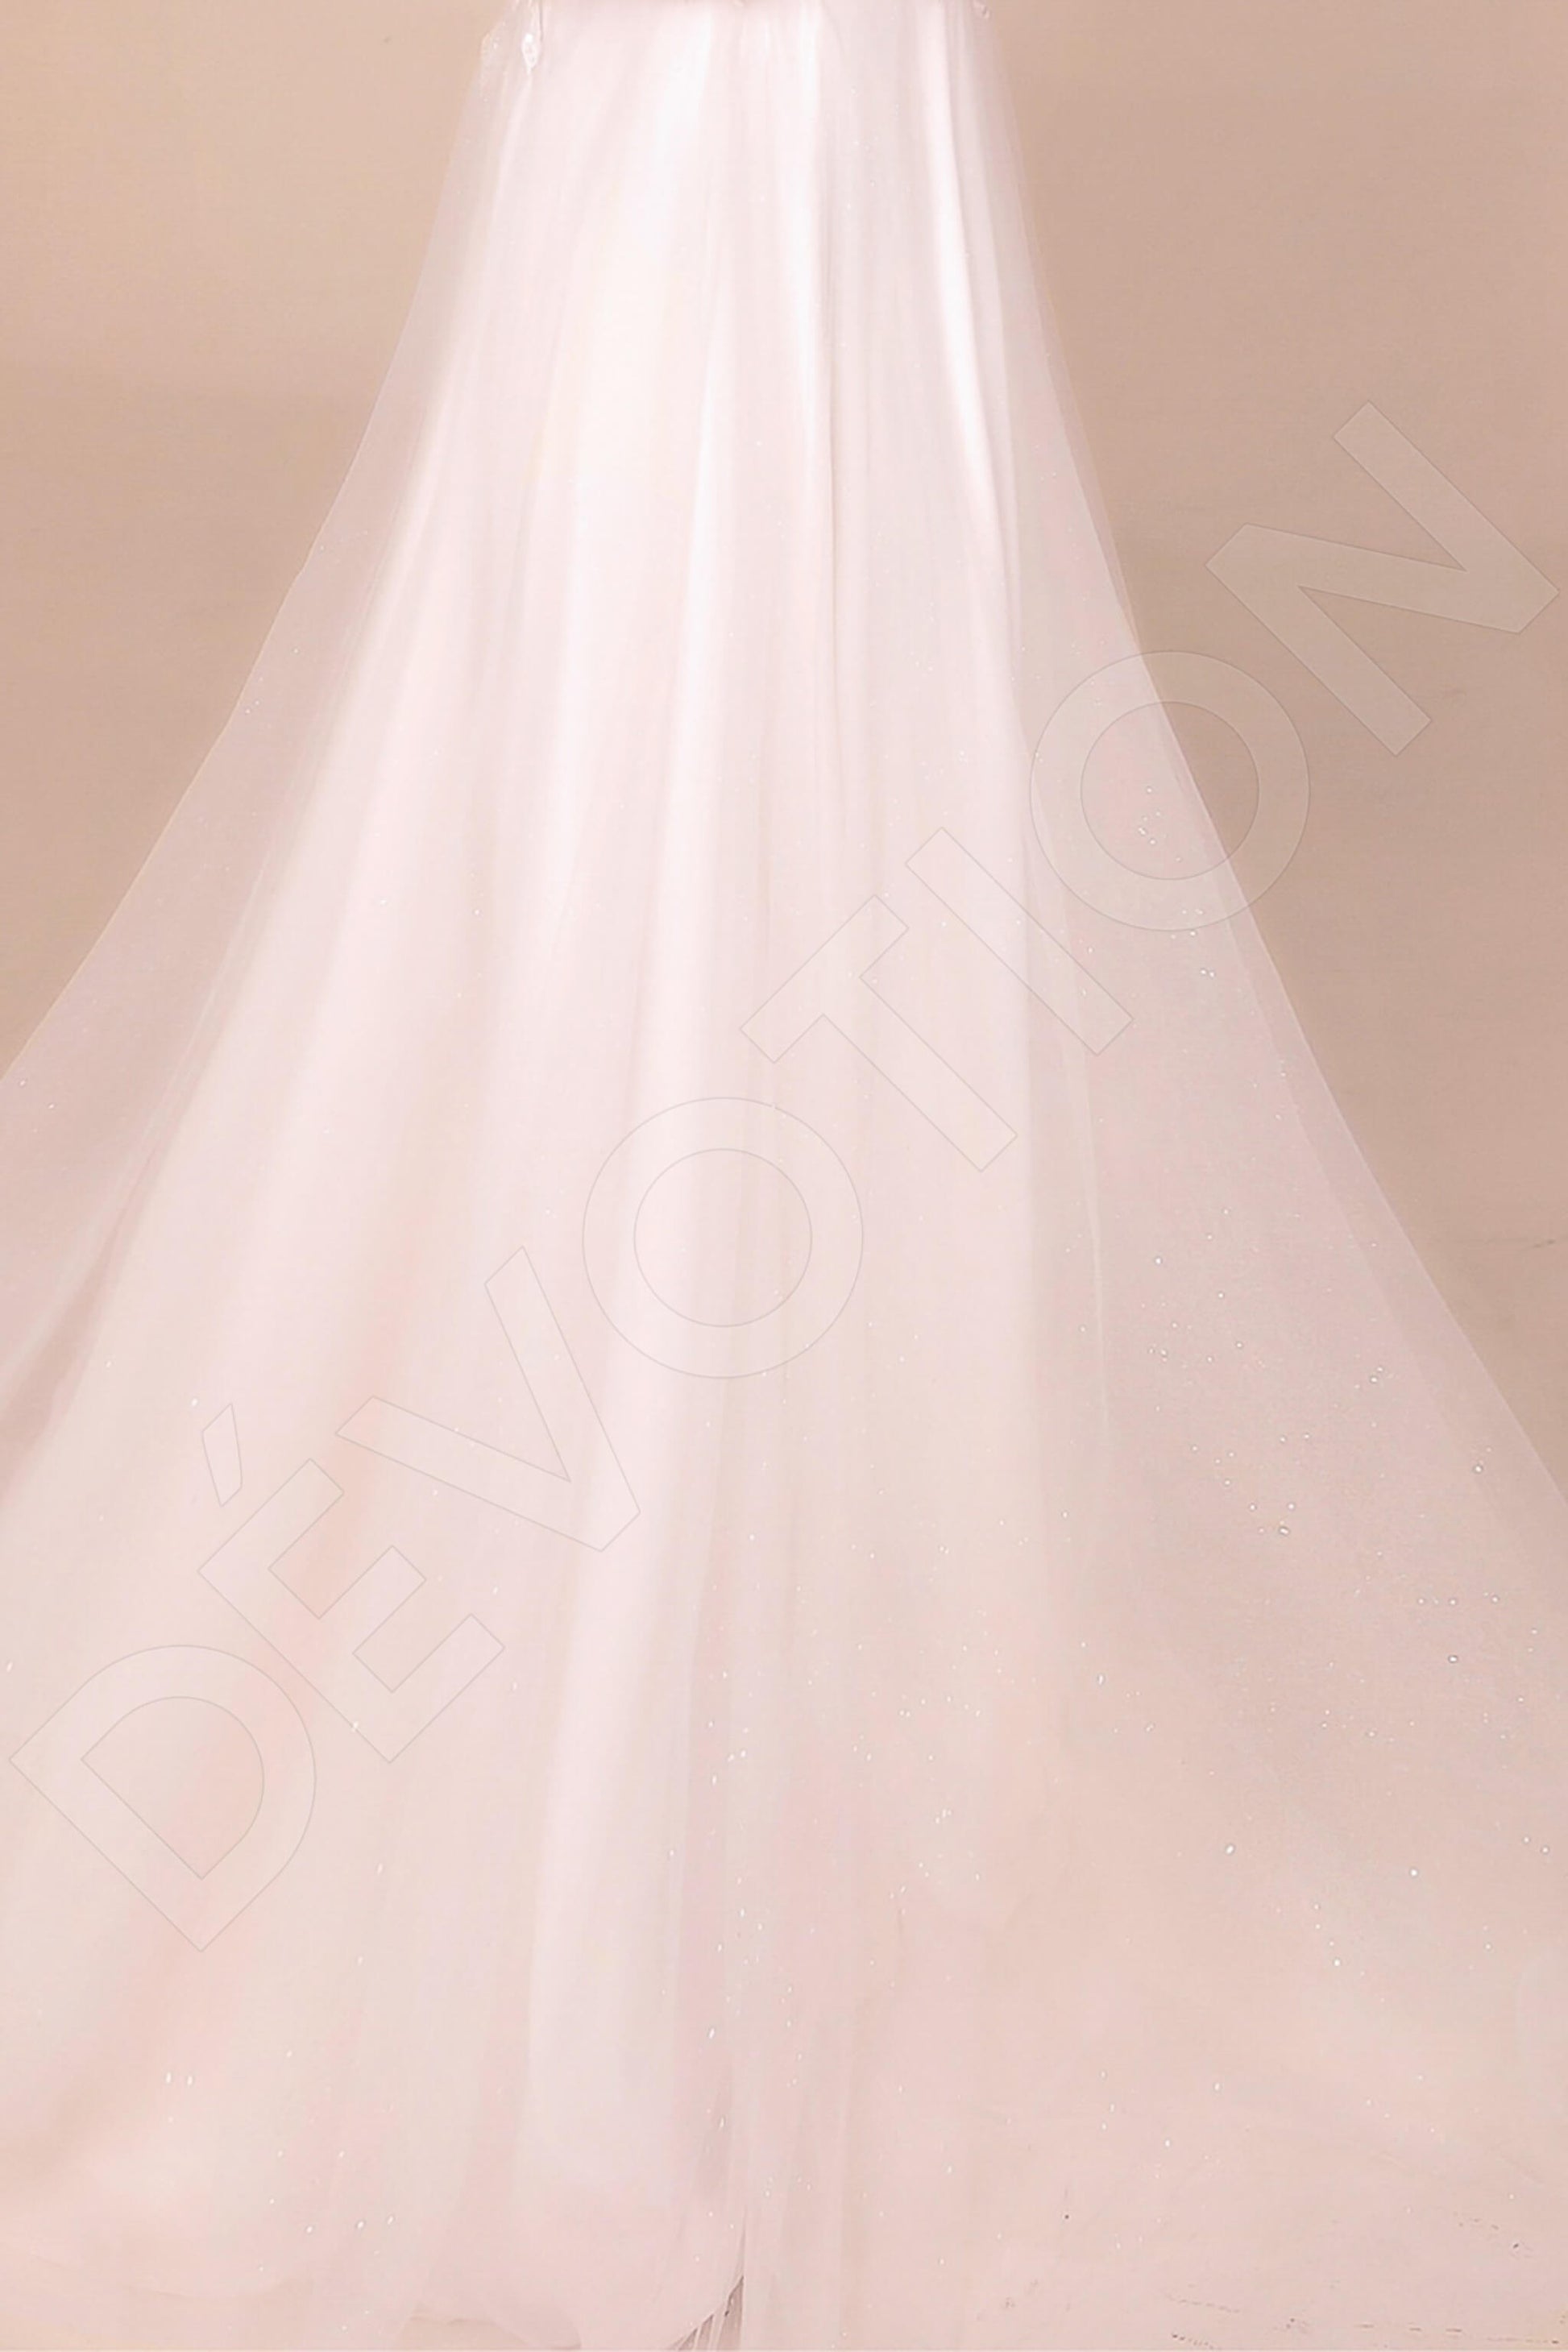 Bearise A-line V-neck White Wedding dress